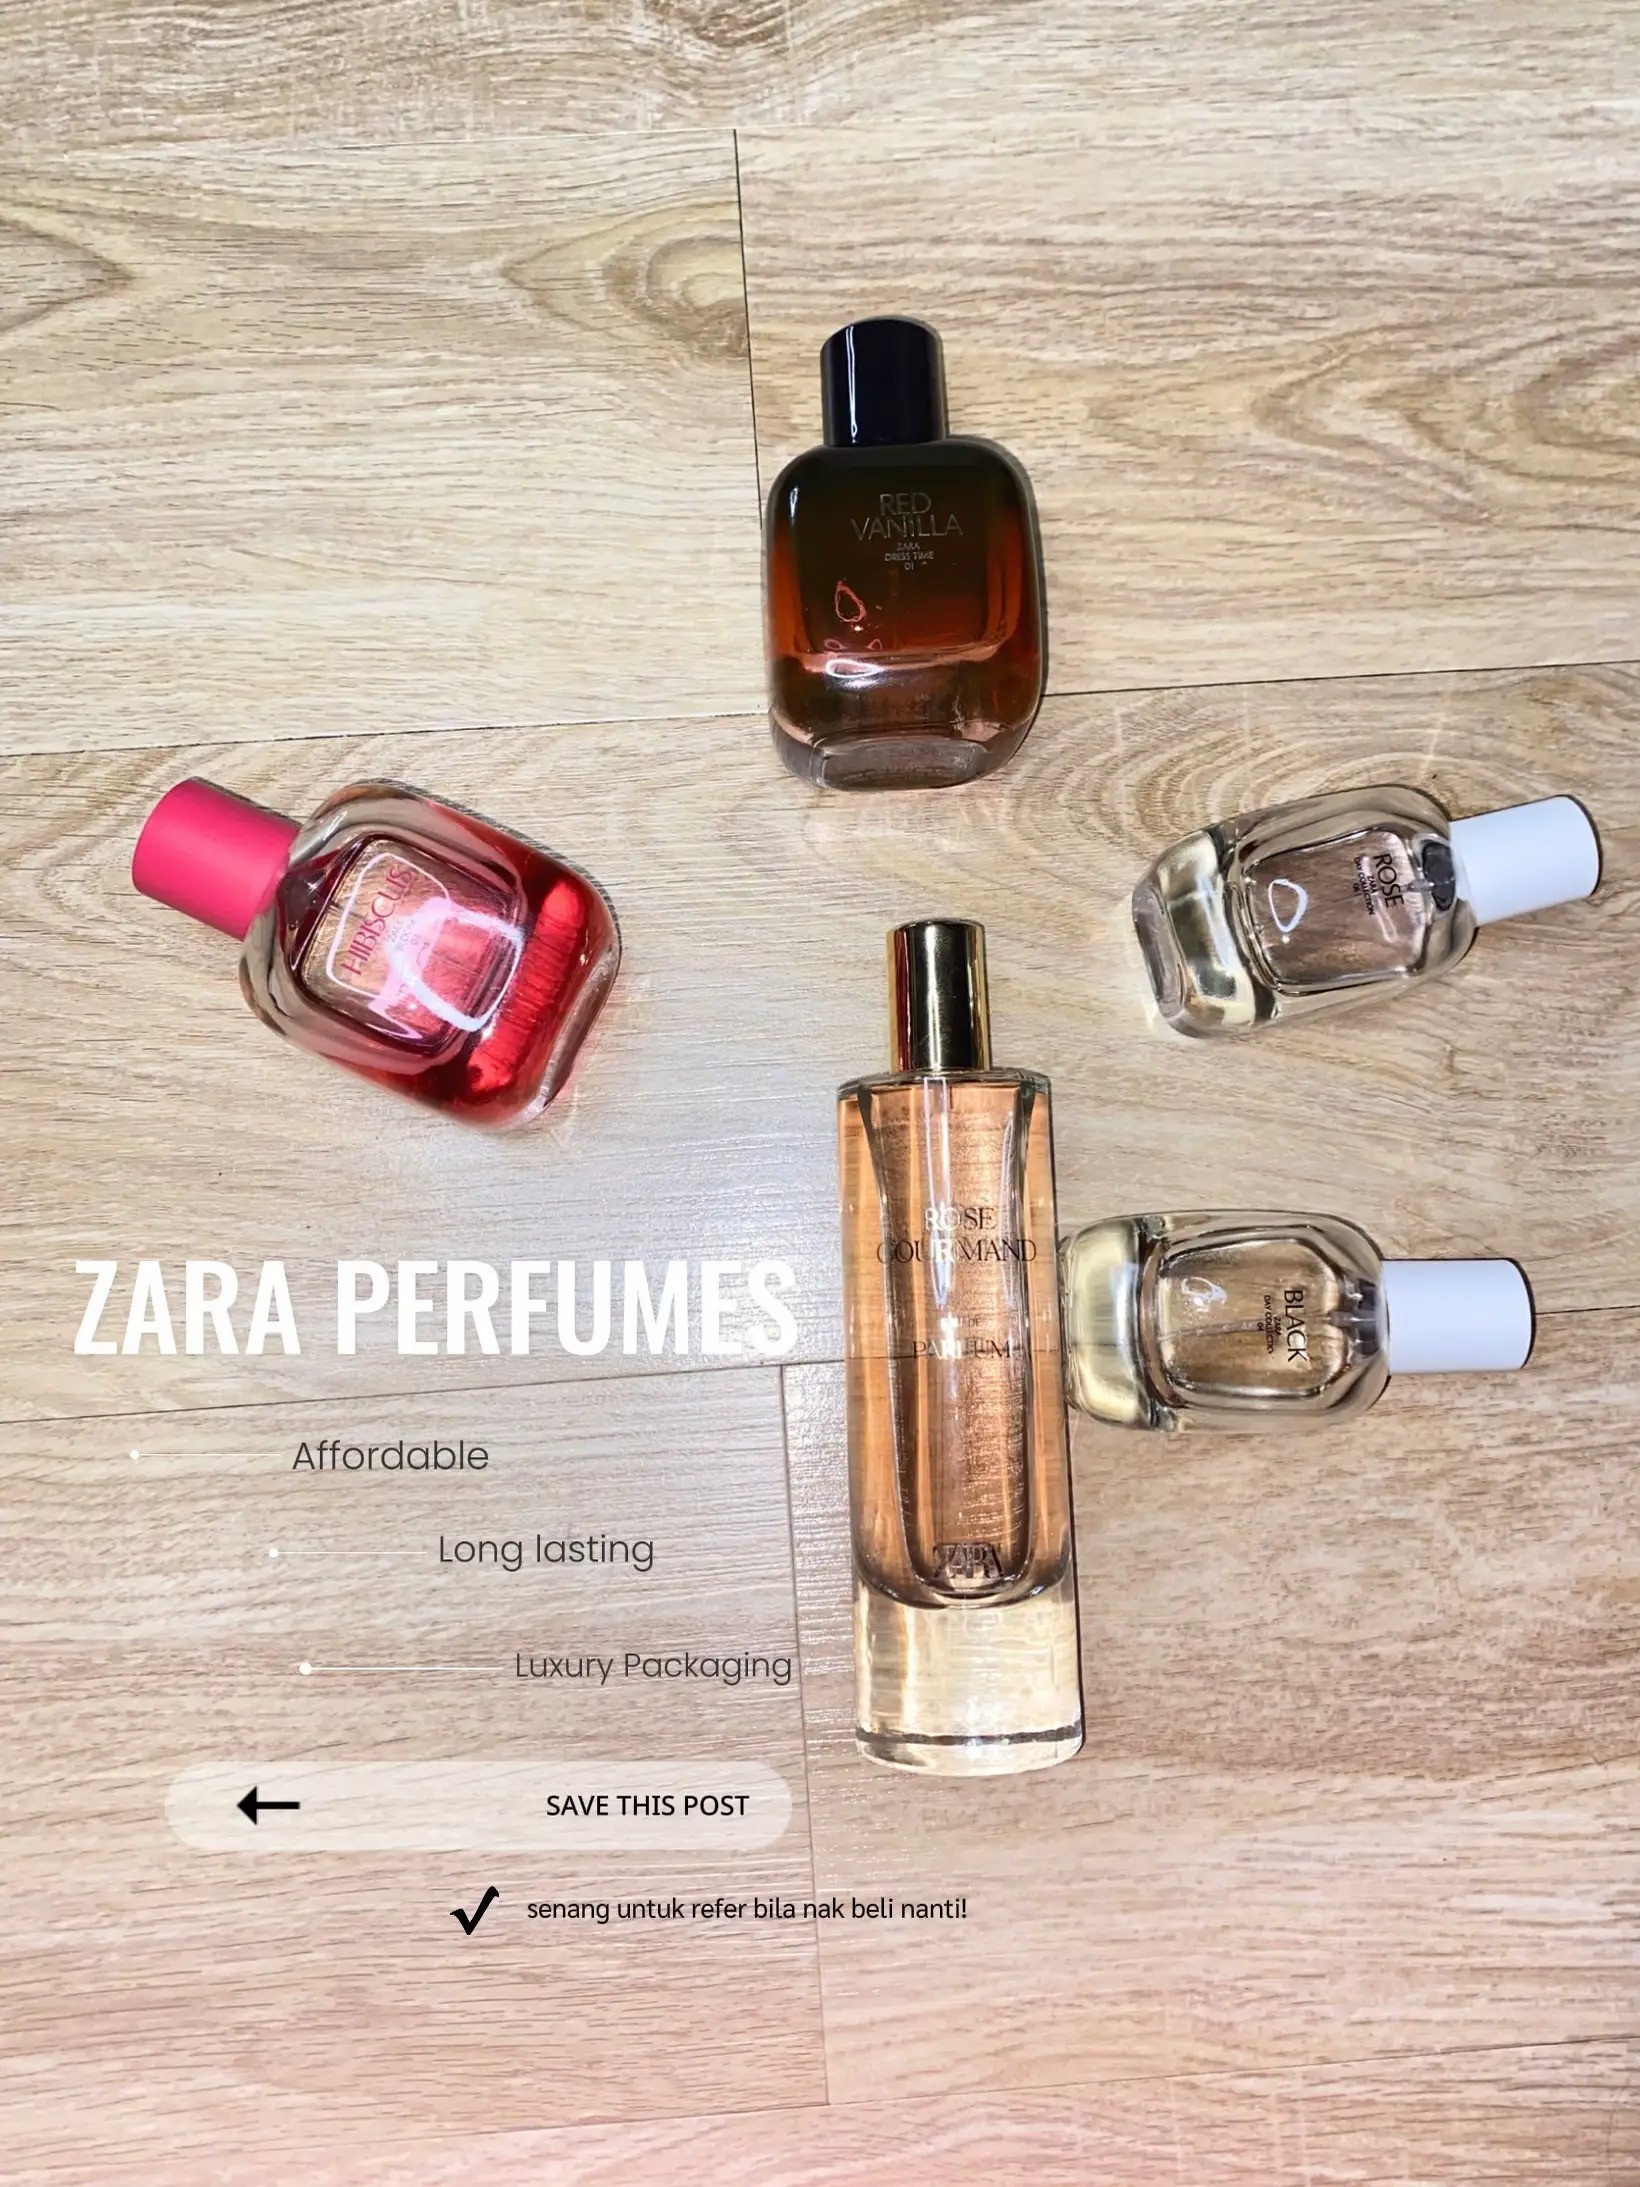 Affordable ZARA perfumes! Designer dupes